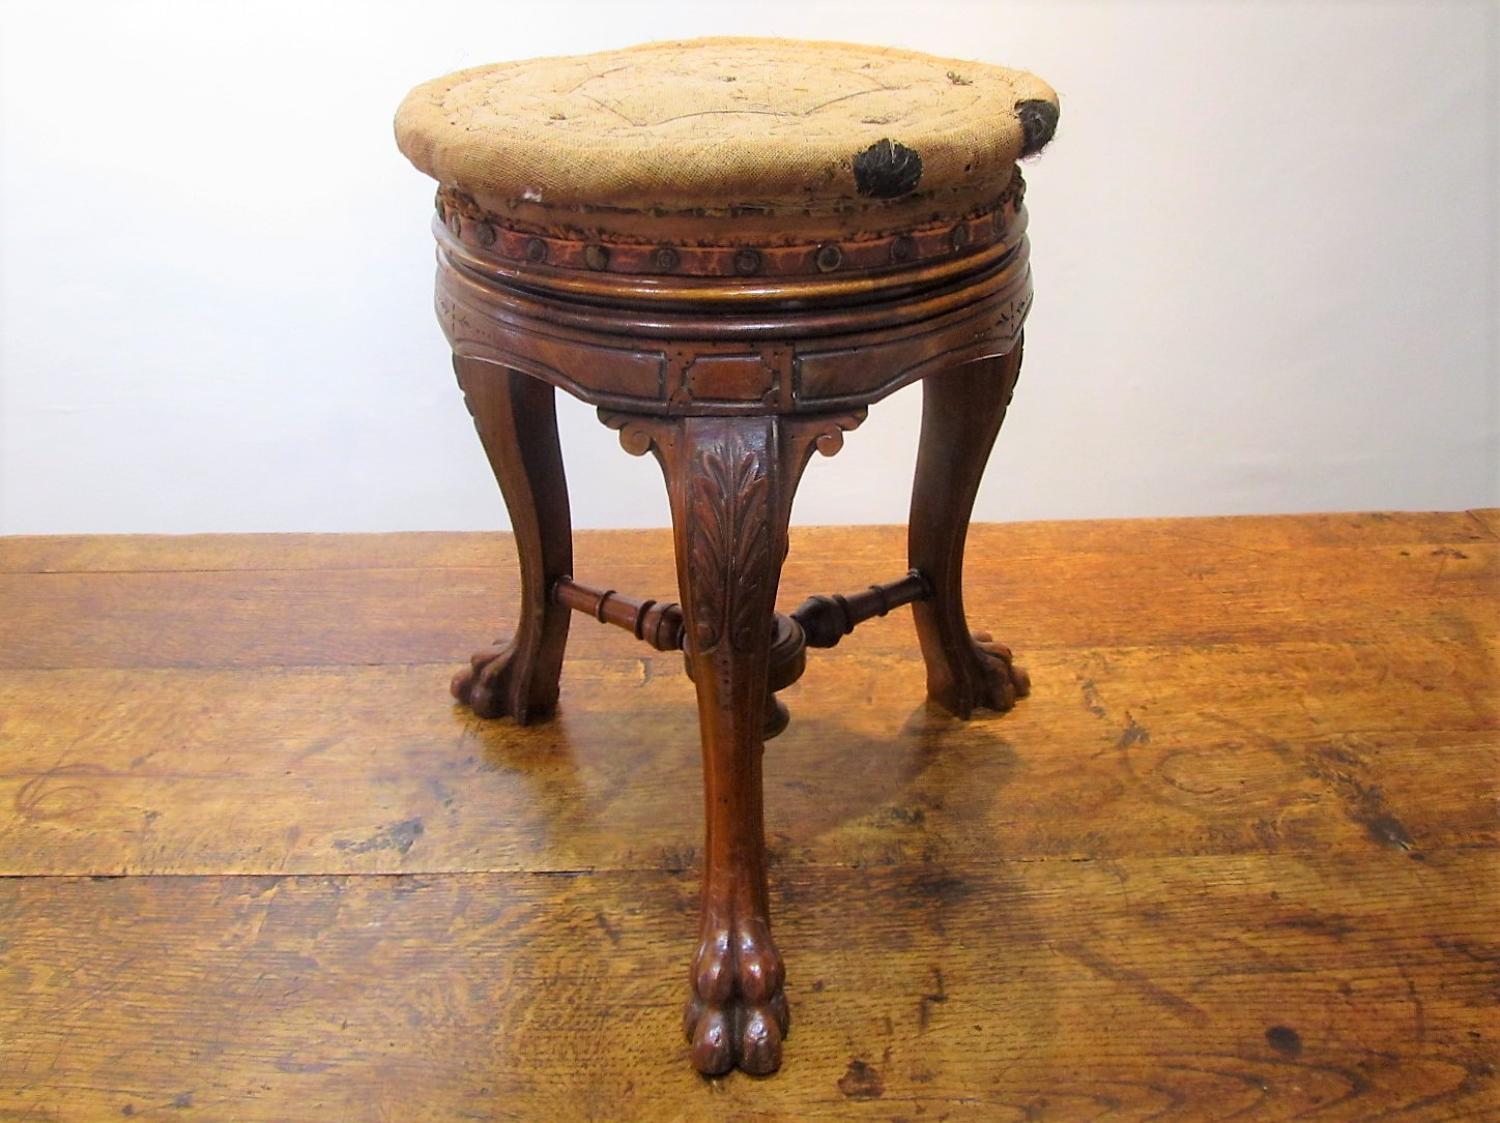 A 19thC Walnut tripod stool by Howe London